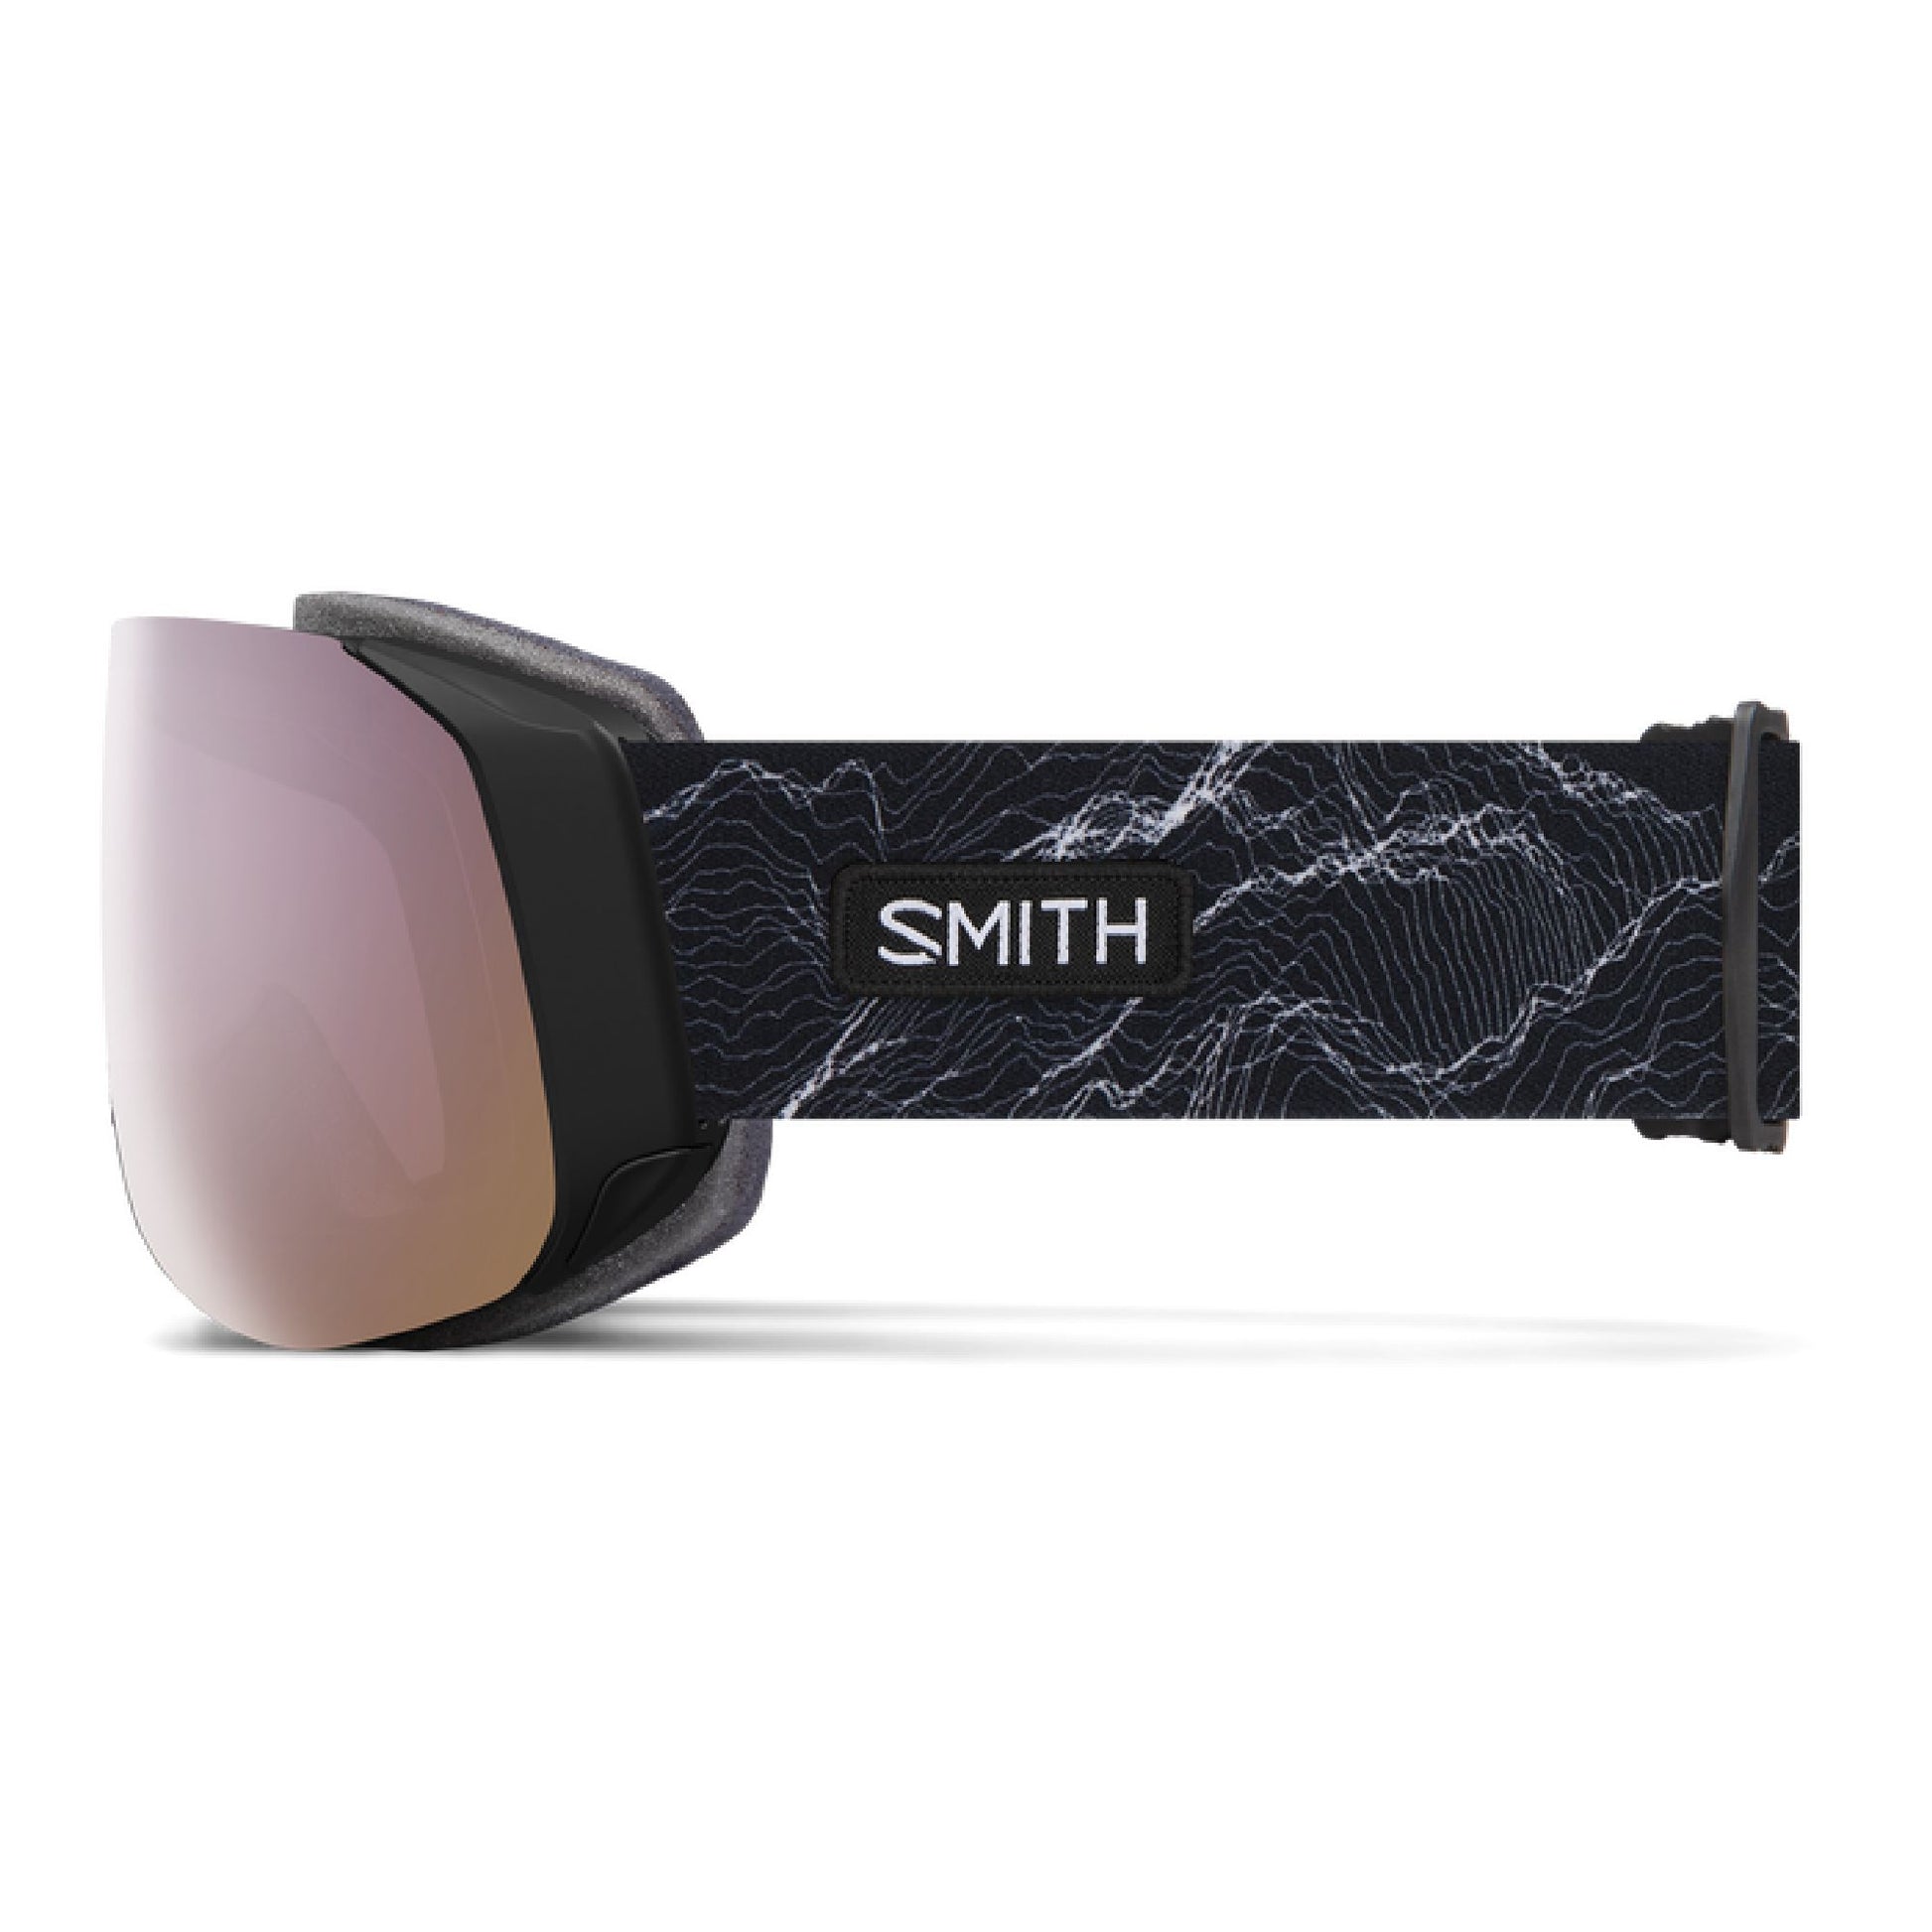 Smith 4D MAG S Low Bridge Fit Snow Goggle White Vapor / ChromaPop Photochromic Rose Flash Snow Goggles